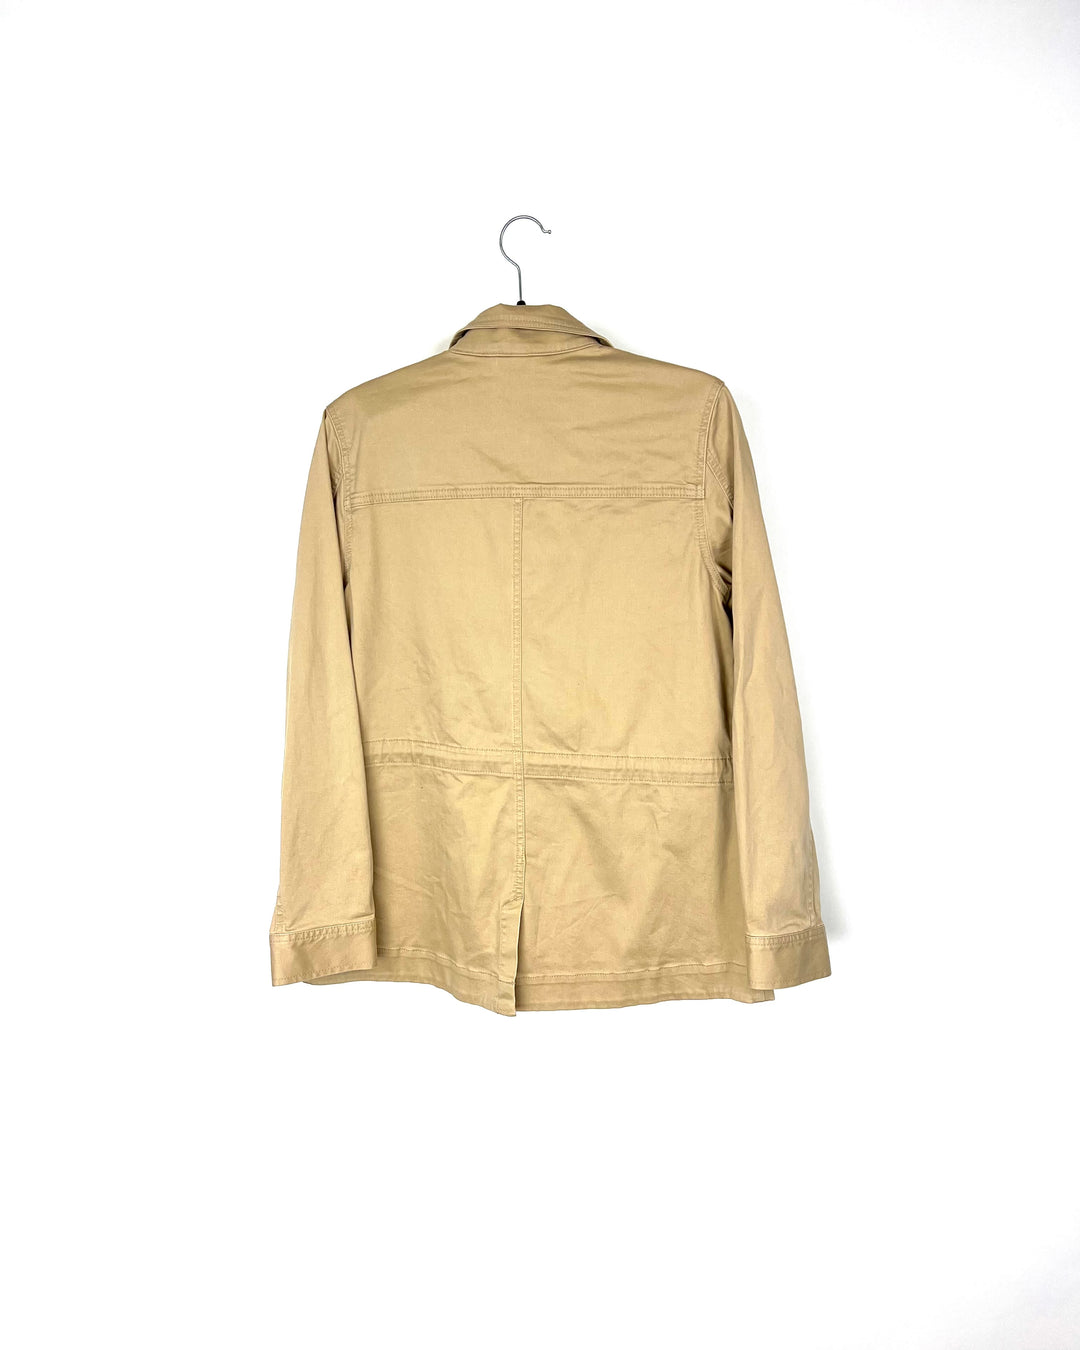 Tan Long Sleeve Utility Jacket - Small